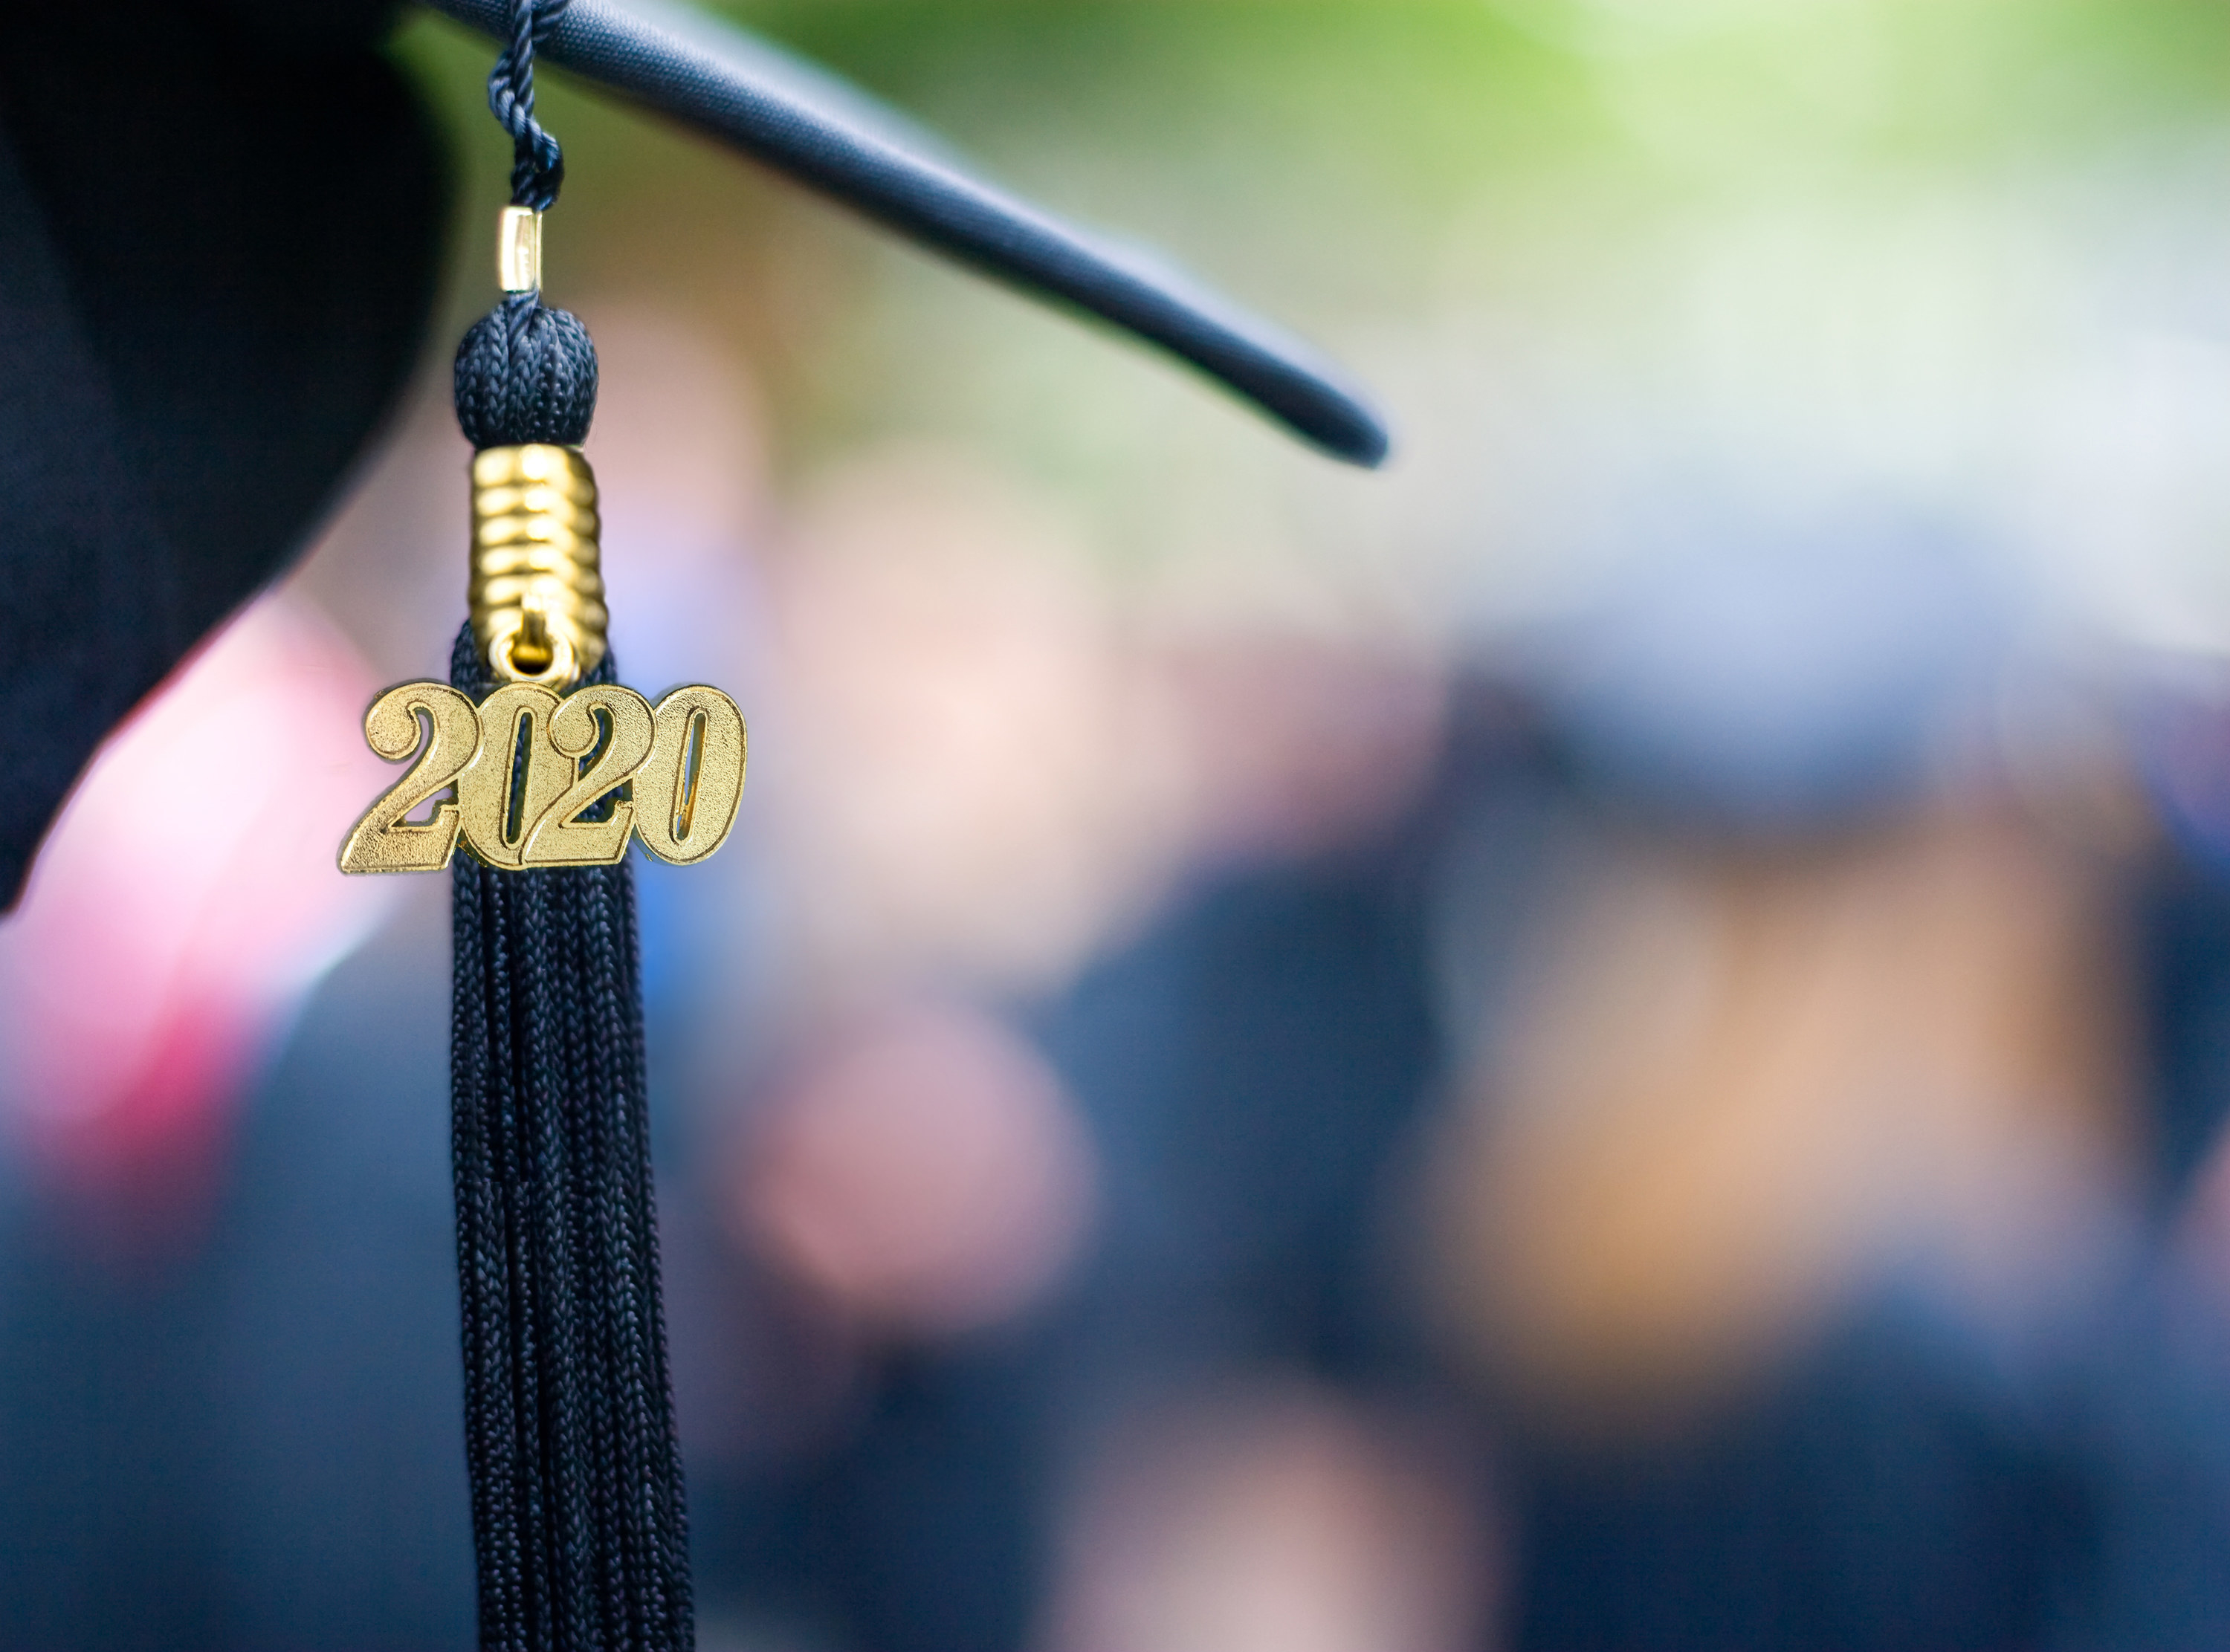 A 2020 tassel on a graduation cap